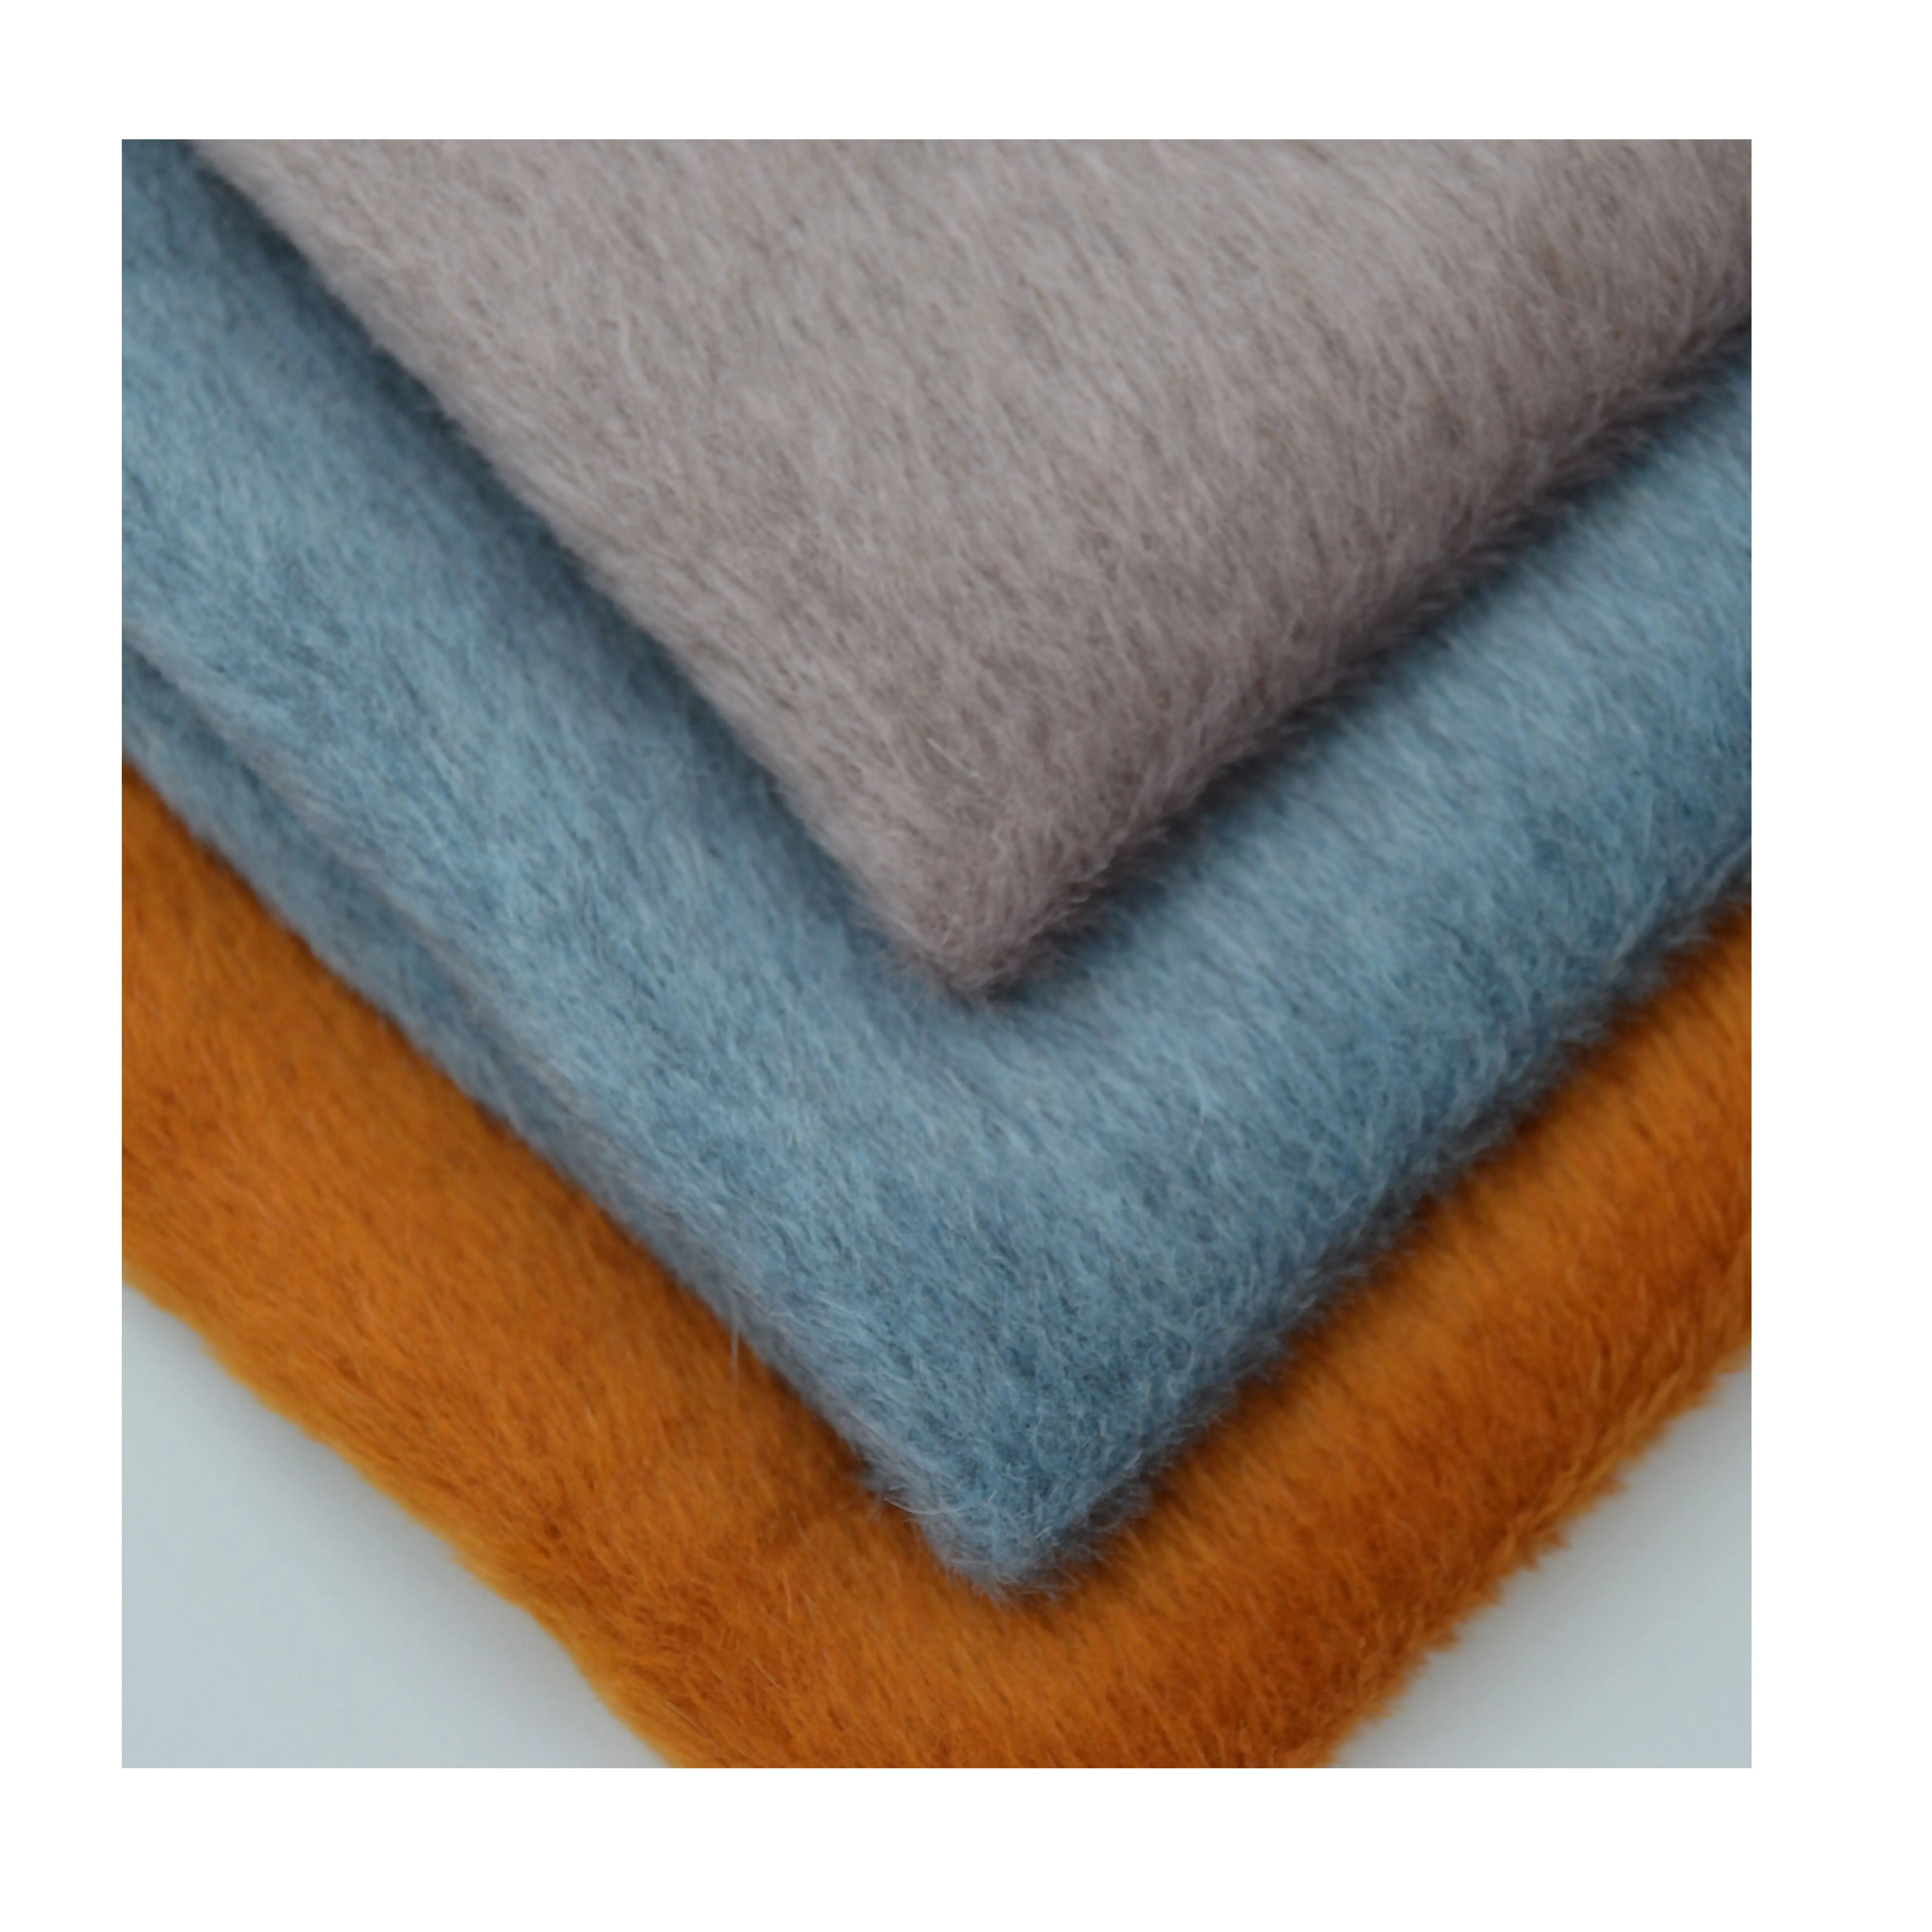 single face solid alpaca blend wool blend fabric for woolen coats